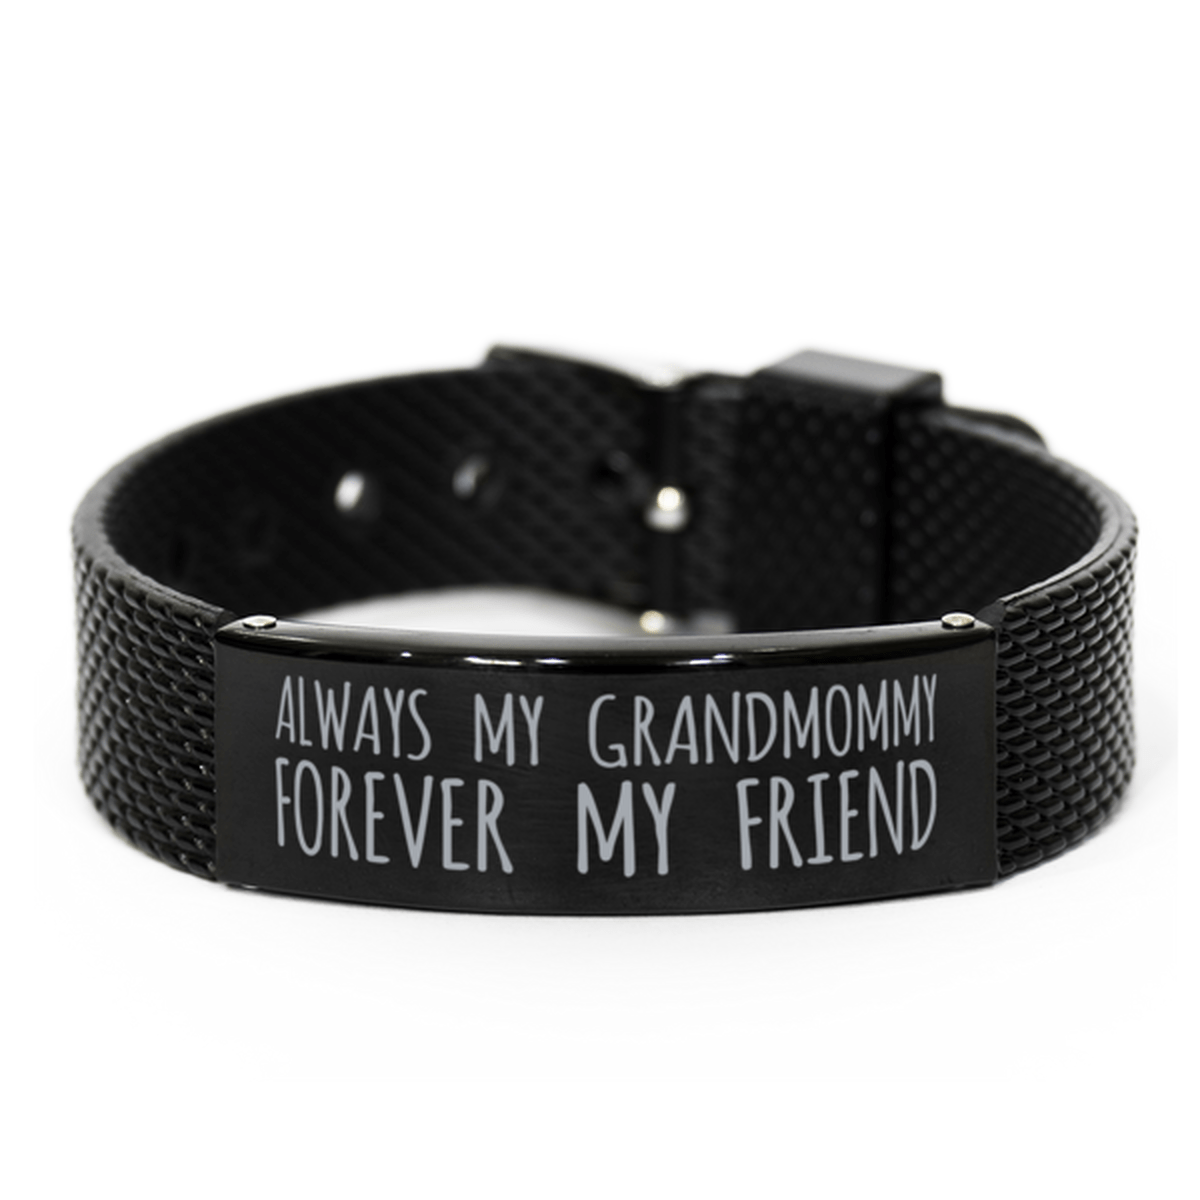 Inspirational Grandmommy Black Shark Mesh Bracelet, Always My Grandmommy Forever My Friend, Best Birthday Gifts for Family Friends